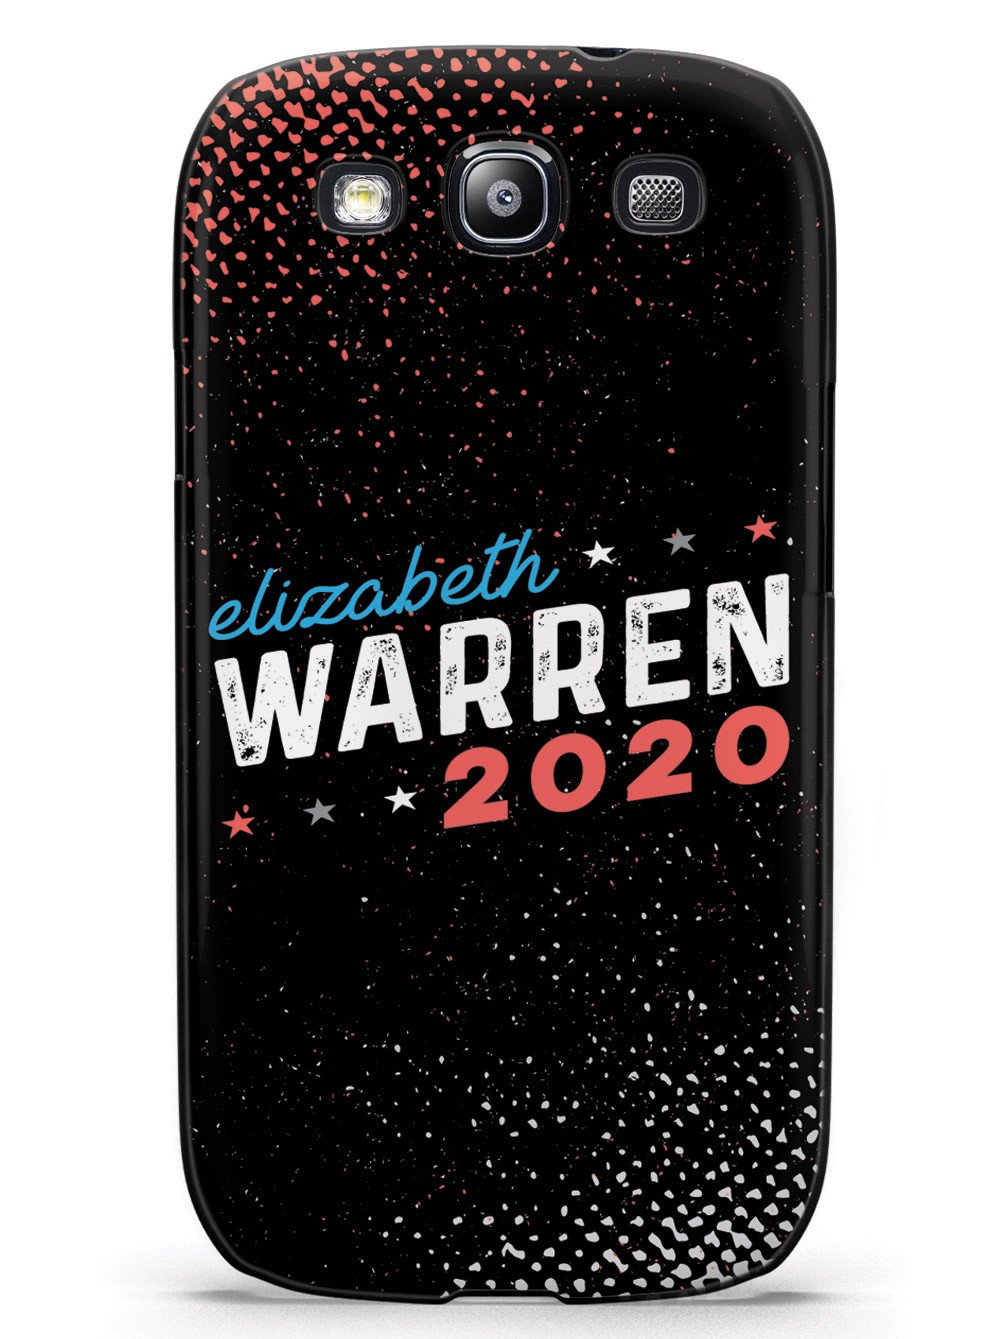 Elizabeth Warren For President 2020 - Black Case - pipercleo.com